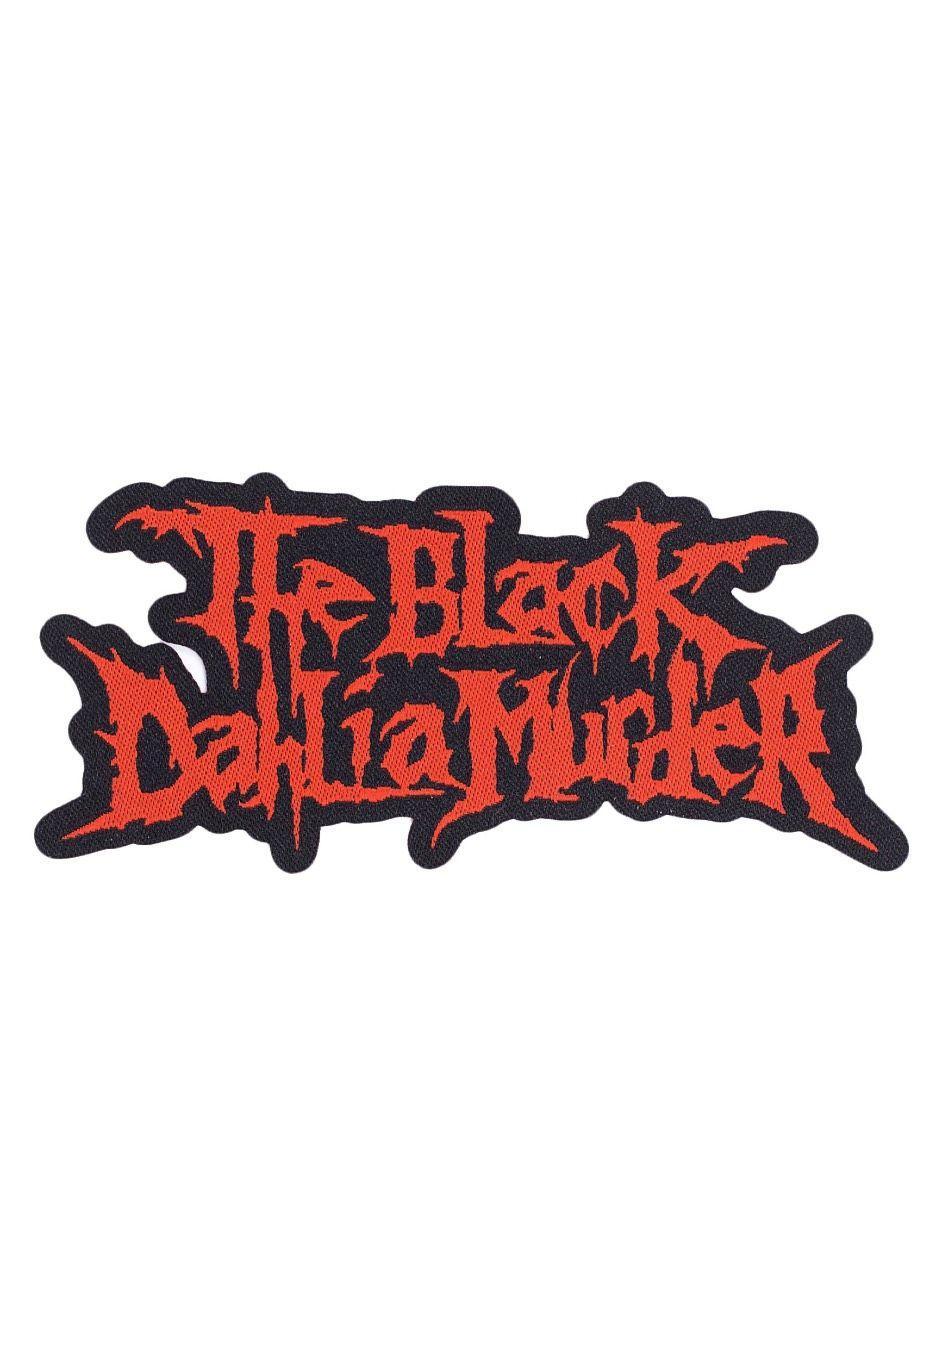 Murder Logo - The Black Dahlia Murder - Red Logo Die Cut - Patch - Impericon.com AU